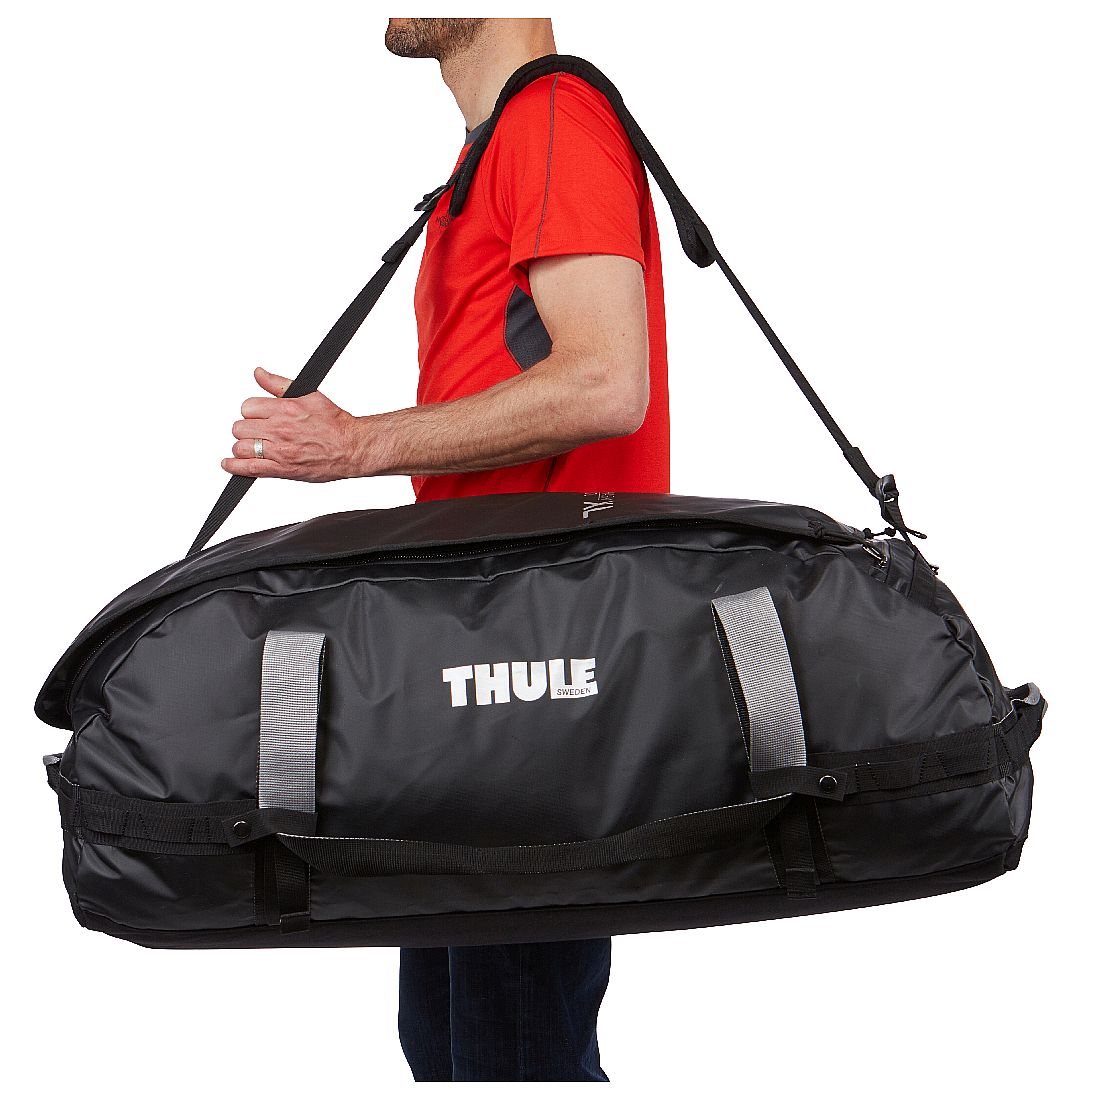 Thule Chasm Duffel Bag 130L XLarge Rucksack Reisetasche 2214